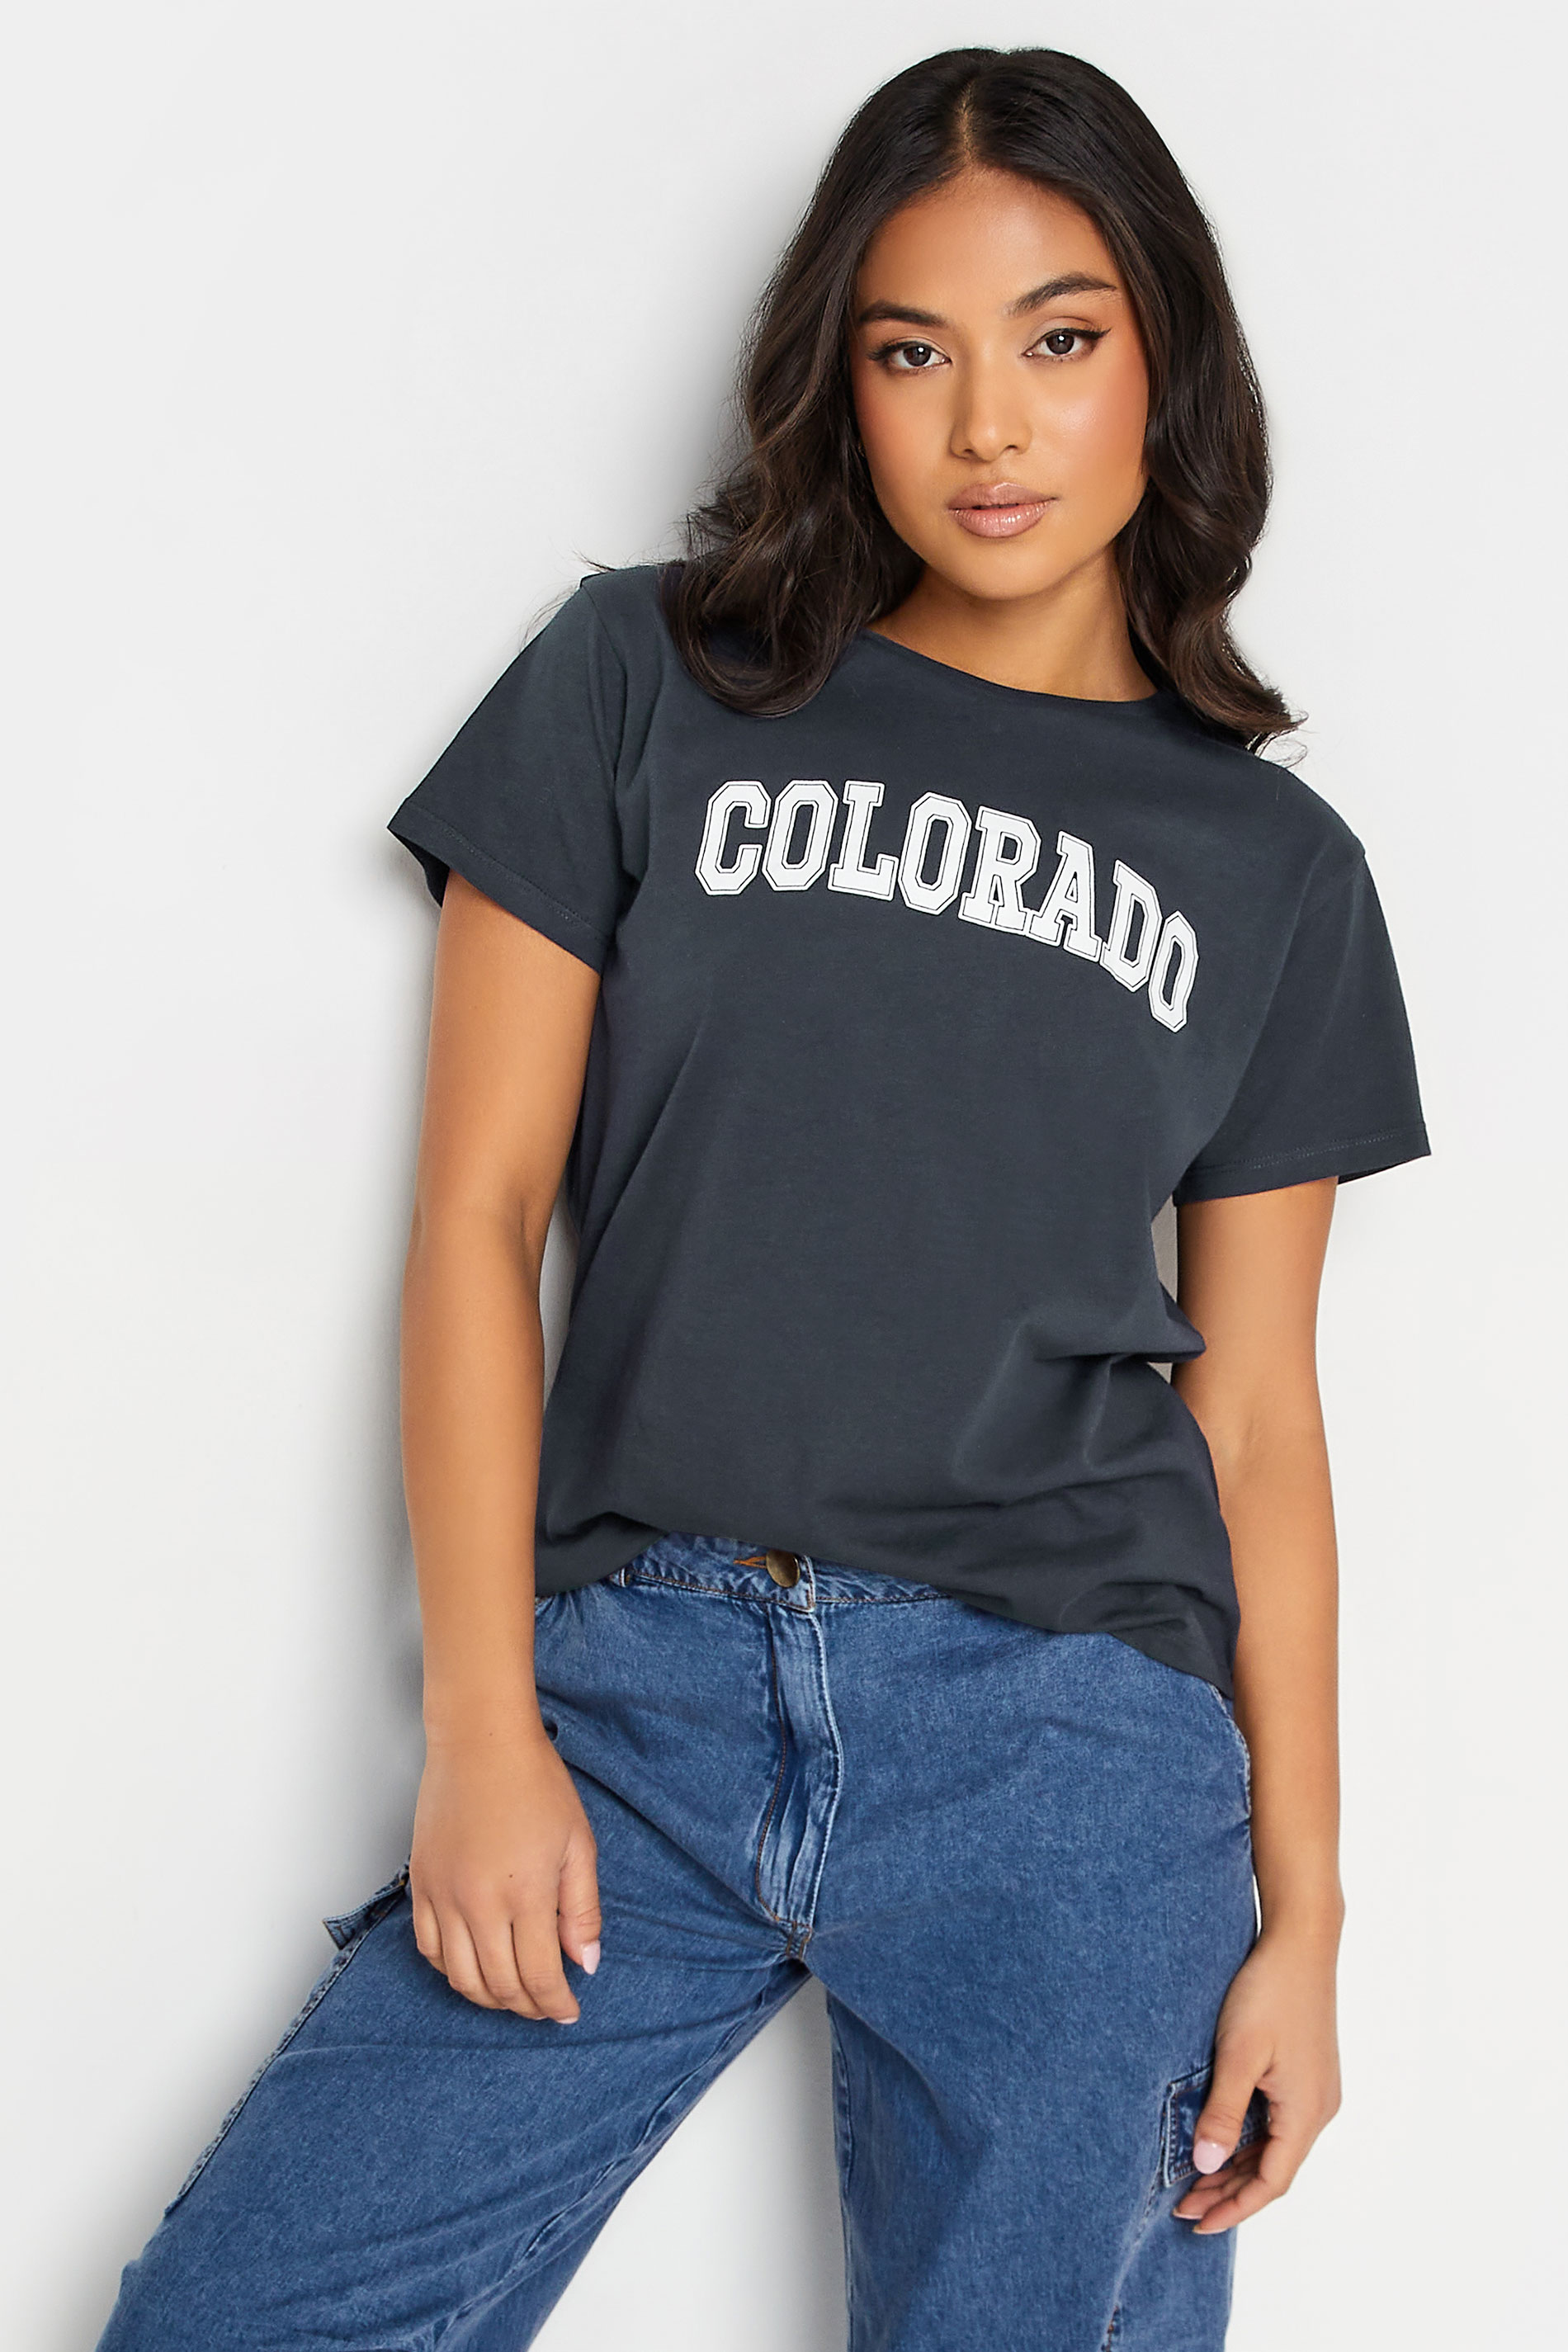 Pixiegirl Navy Blue 'Colorado' Slogan Tshirt 18 Pixiegirl | Petite Women's T-Shirts